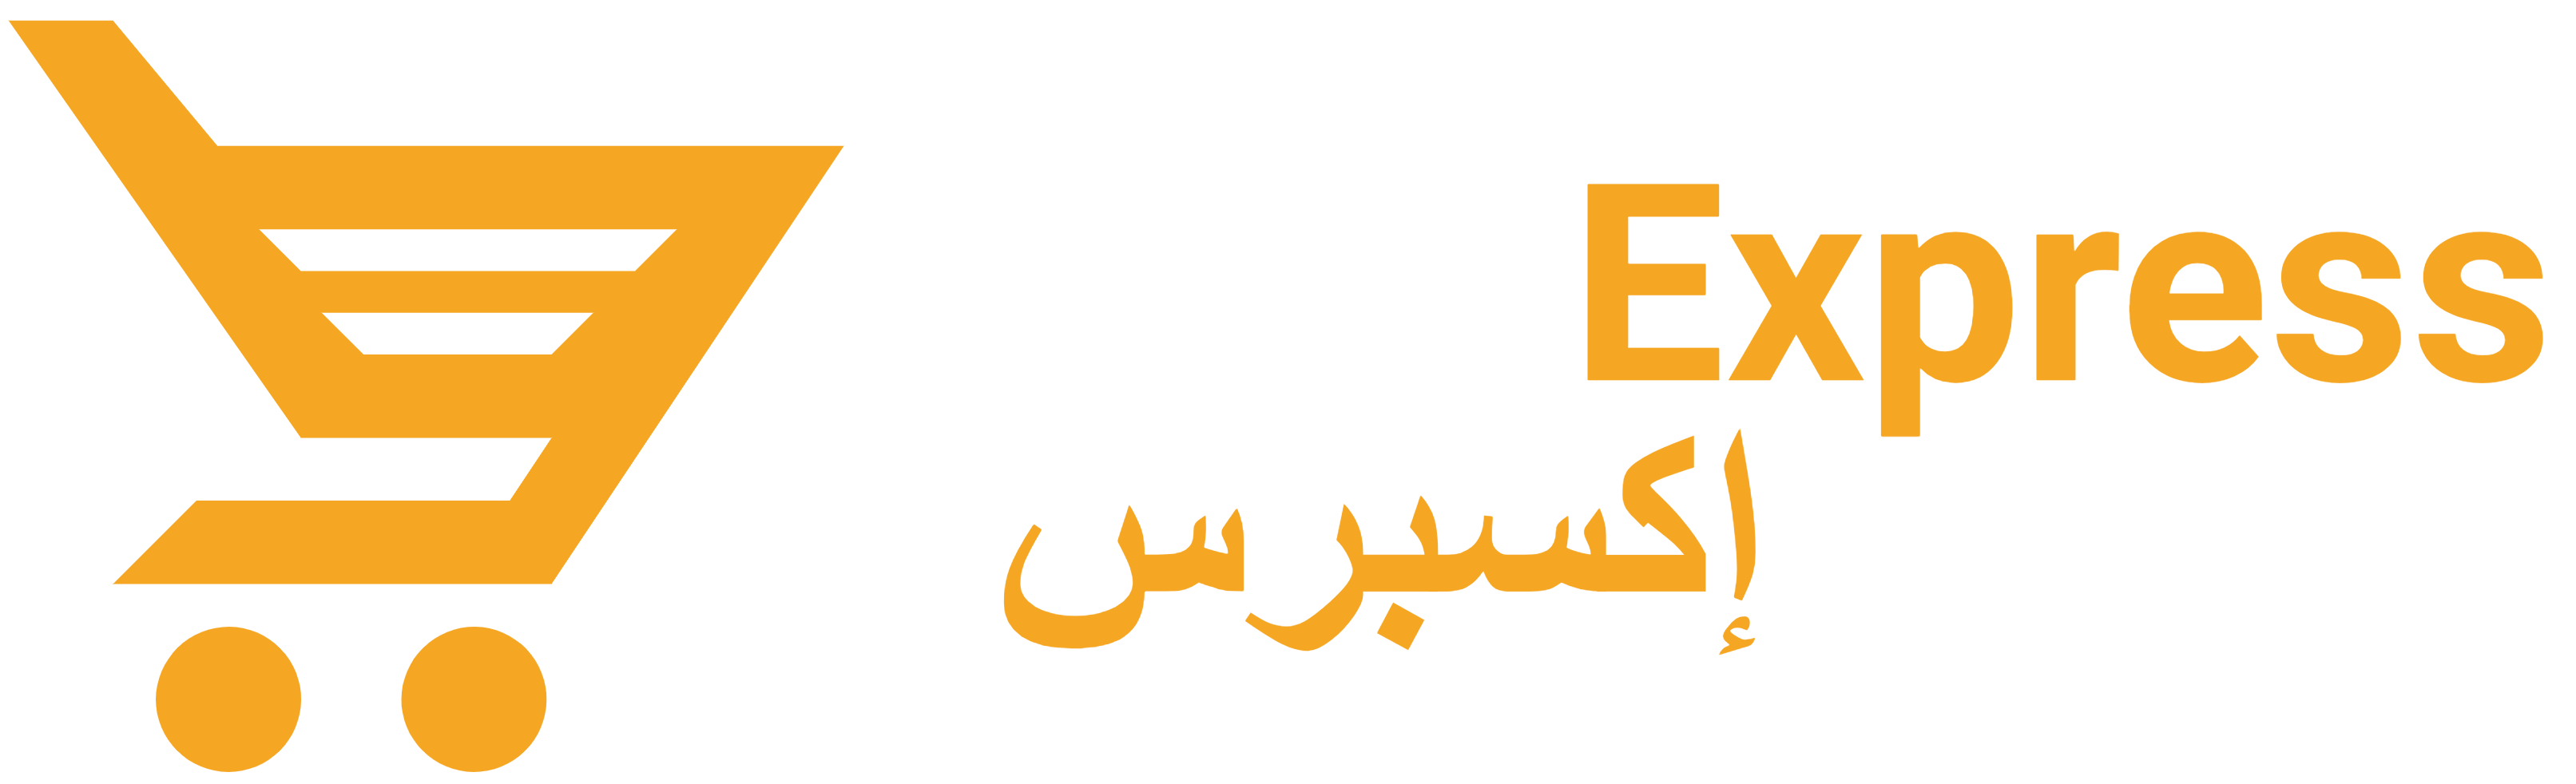 AffariExpress